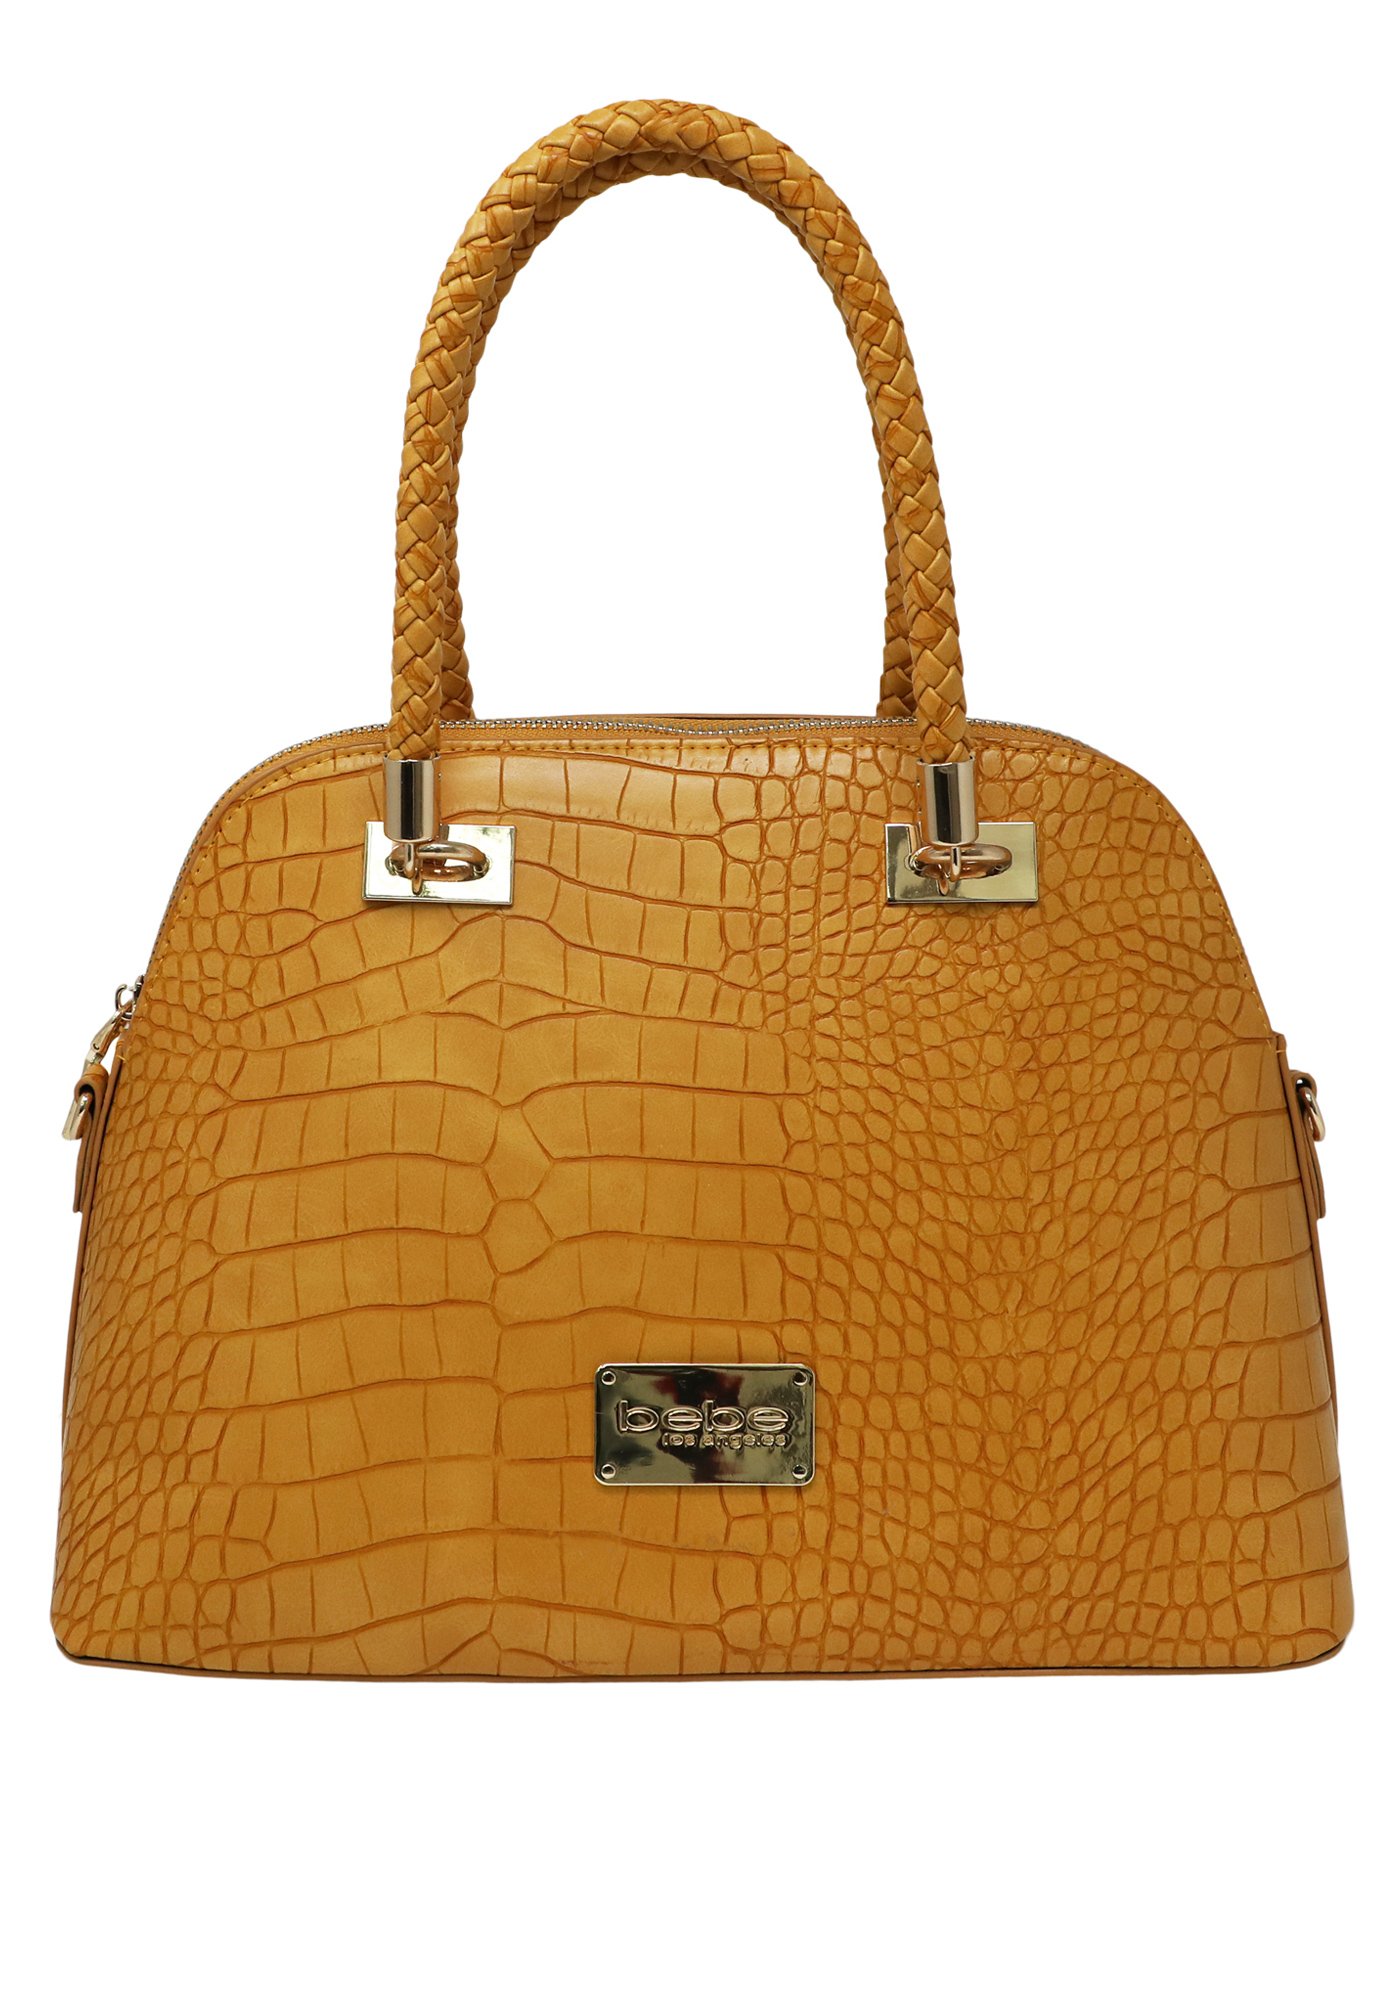 Bebe Women's Natalie Croc Dome Bag, Size OS in Mustard Polyurethane